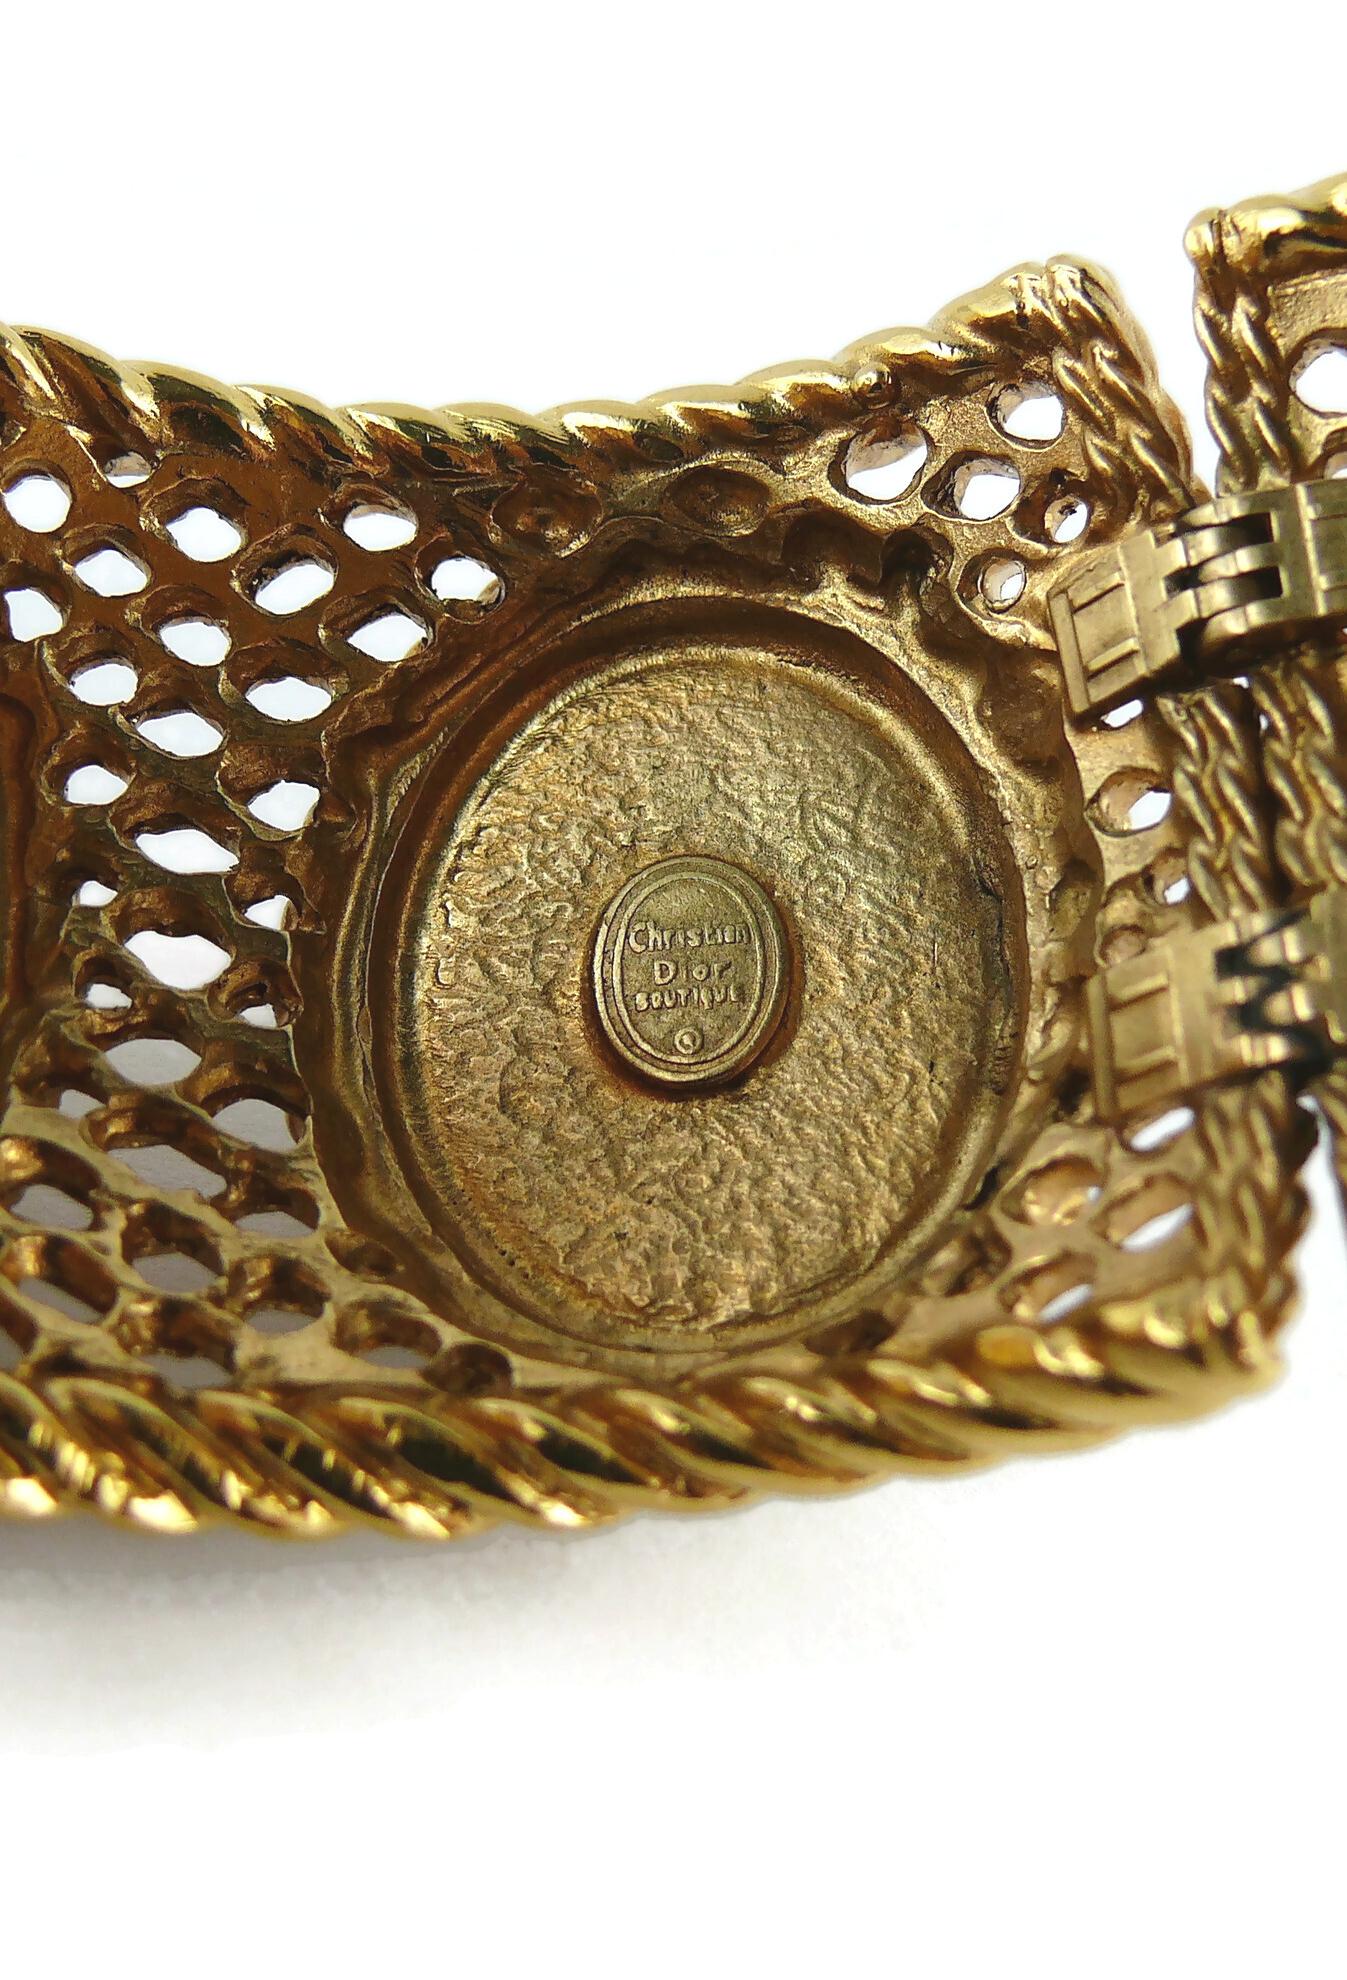 Christian Dior Boutique Massive Jewelled Gold Toned Latticework Cuff Bracelet For Sale 6